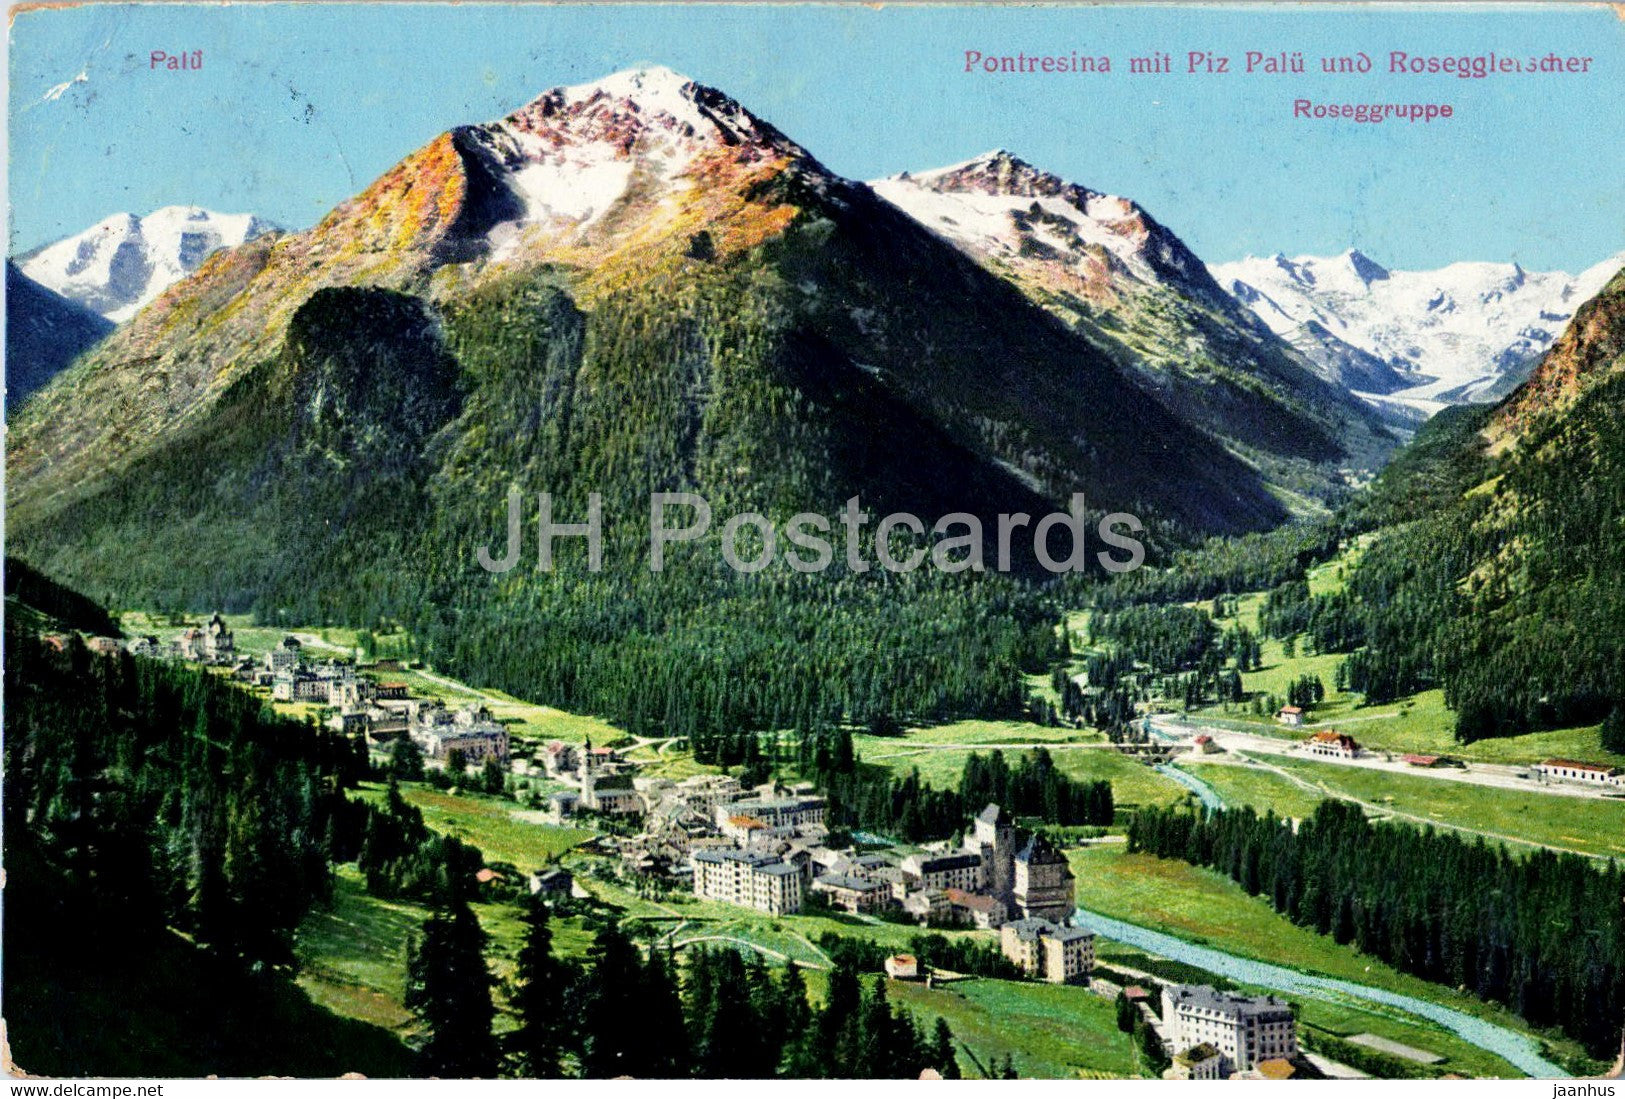 Pontresina mit Piz Palu und Roseggletscher - Roseggruppe - 25 - old postcard - 1912 - Switzerland - used - JH Postcards